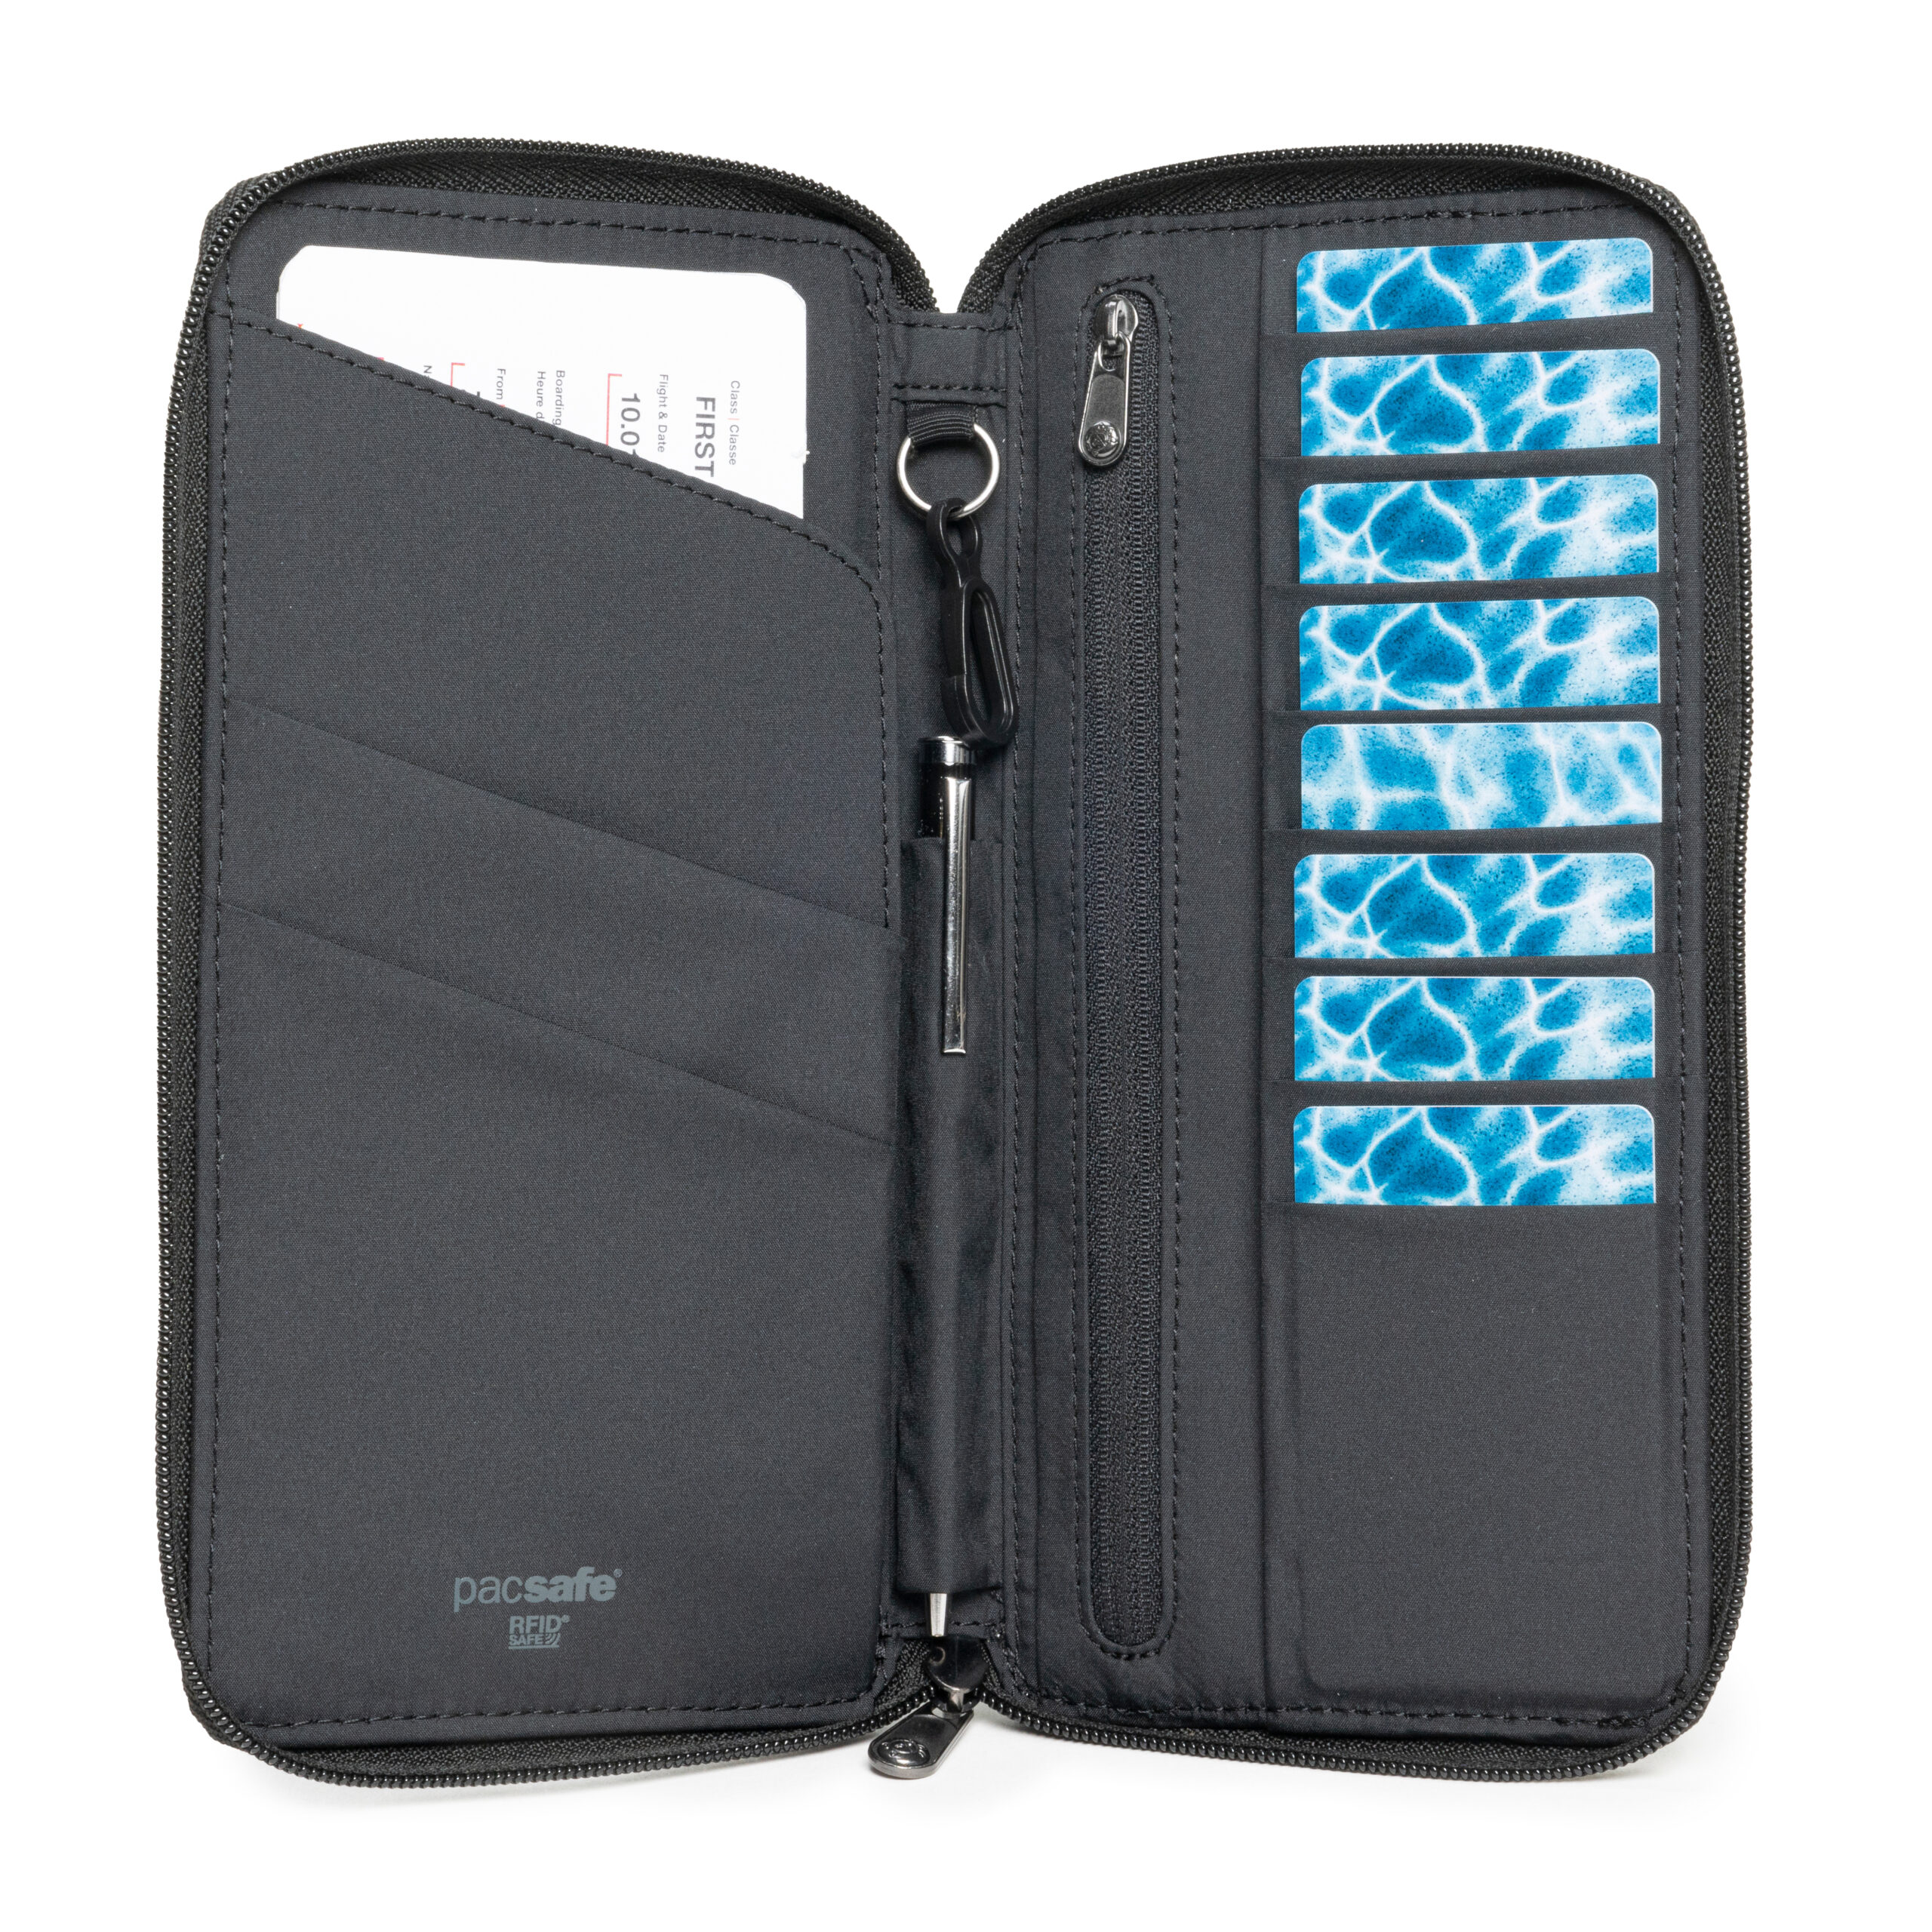 Pacsafe RFIDsafe Travel Wallet - Black - Aspire Adventure Equipment